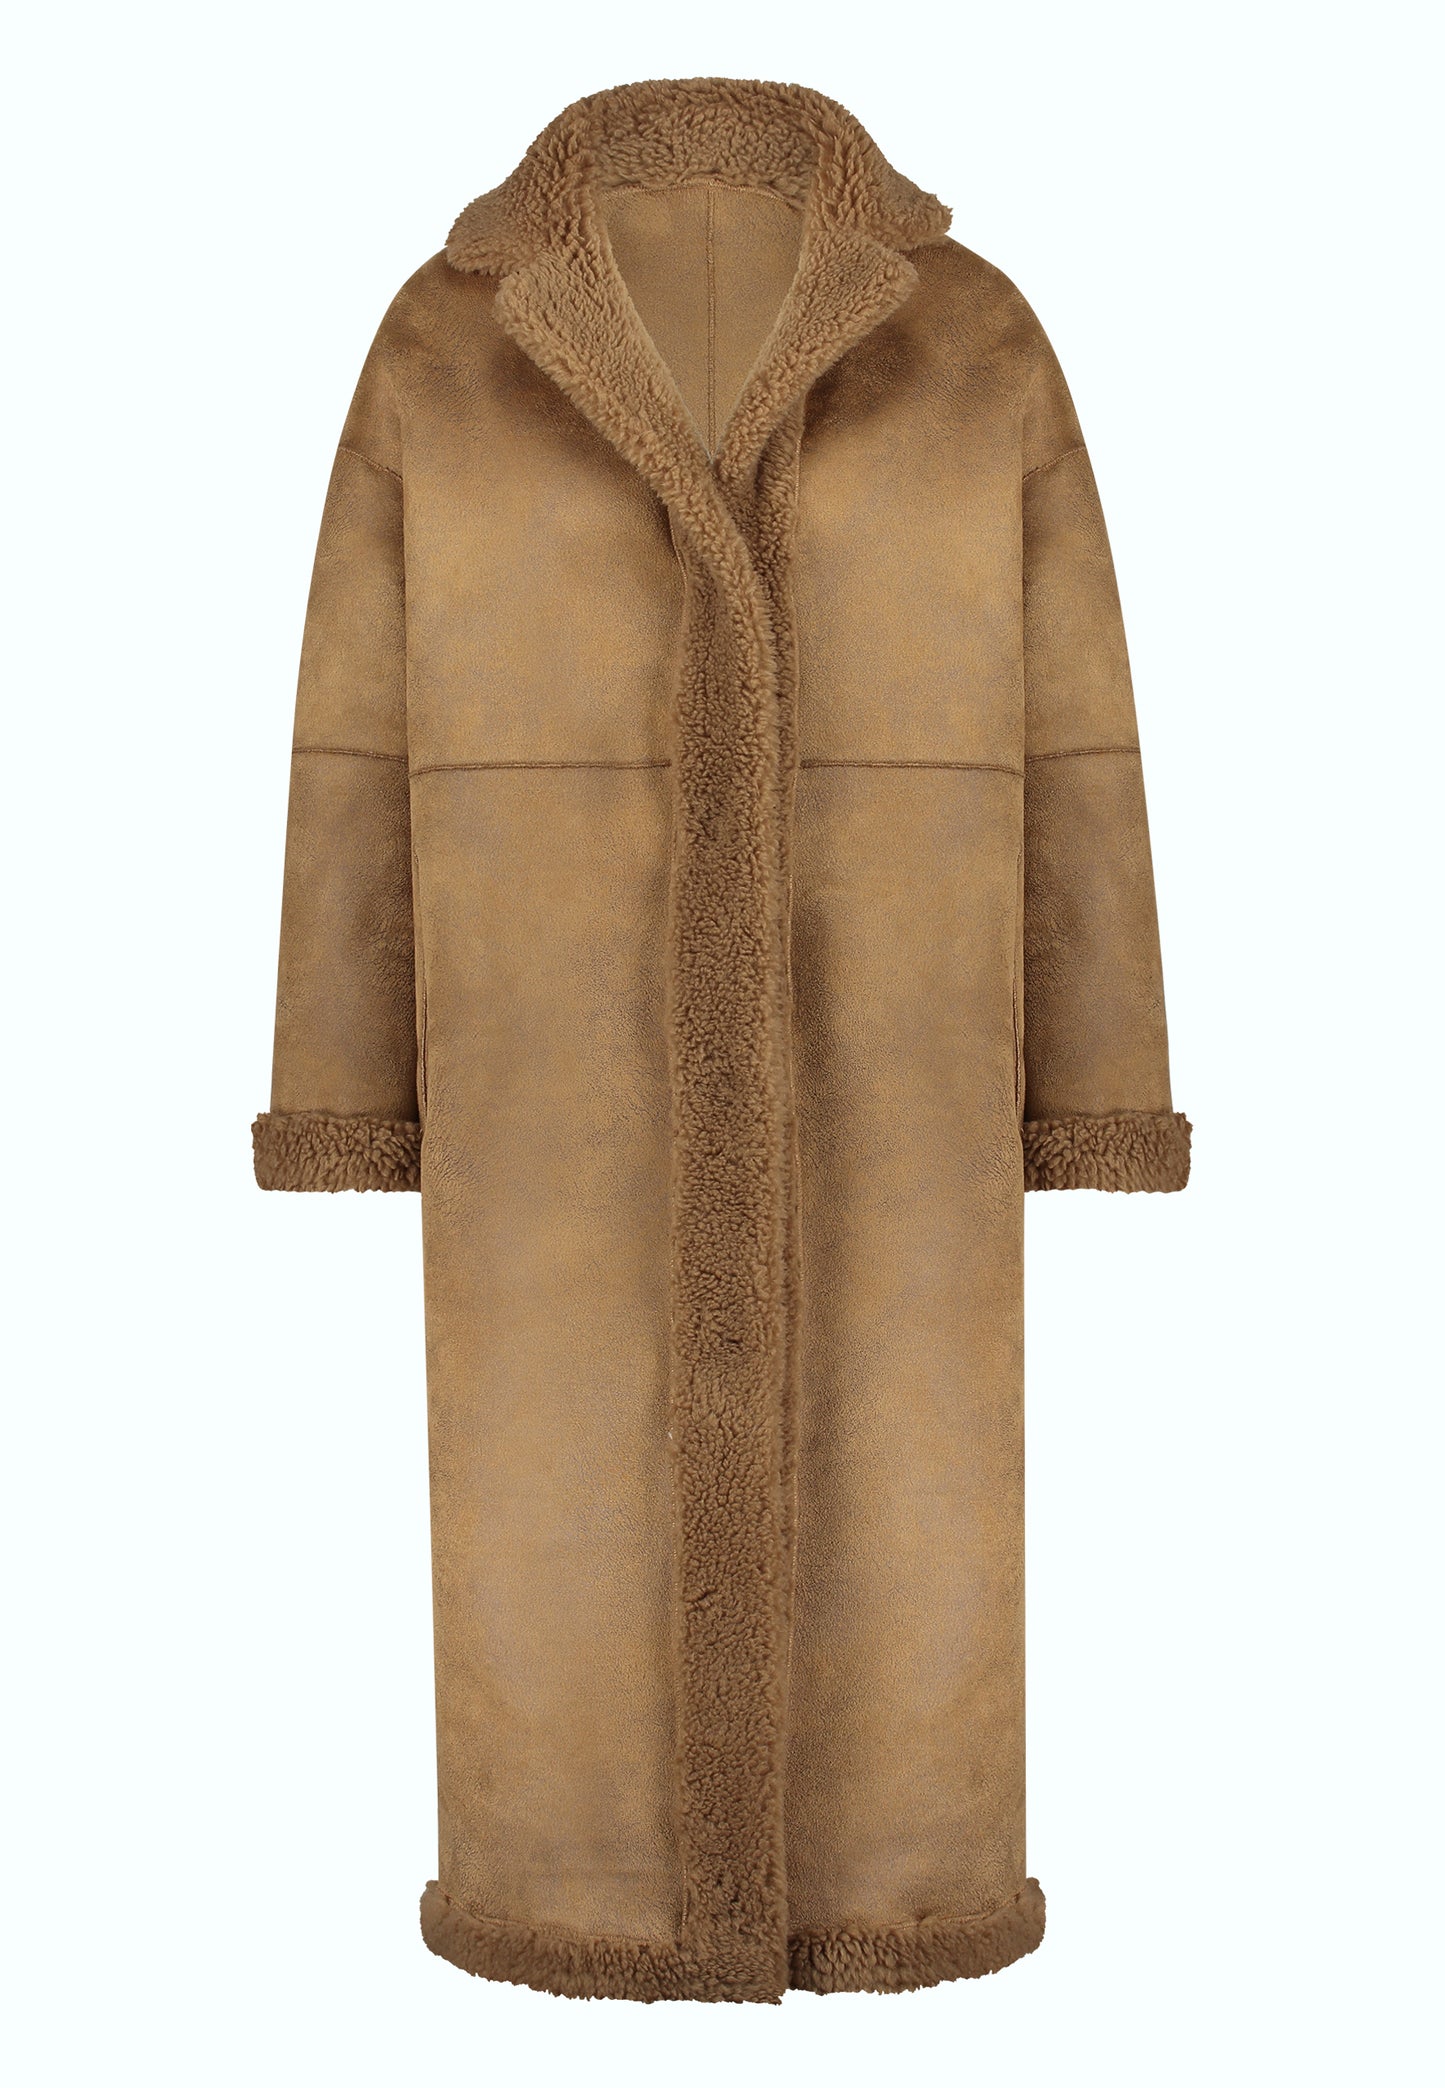 FLORENCE Teddy Wool Coat